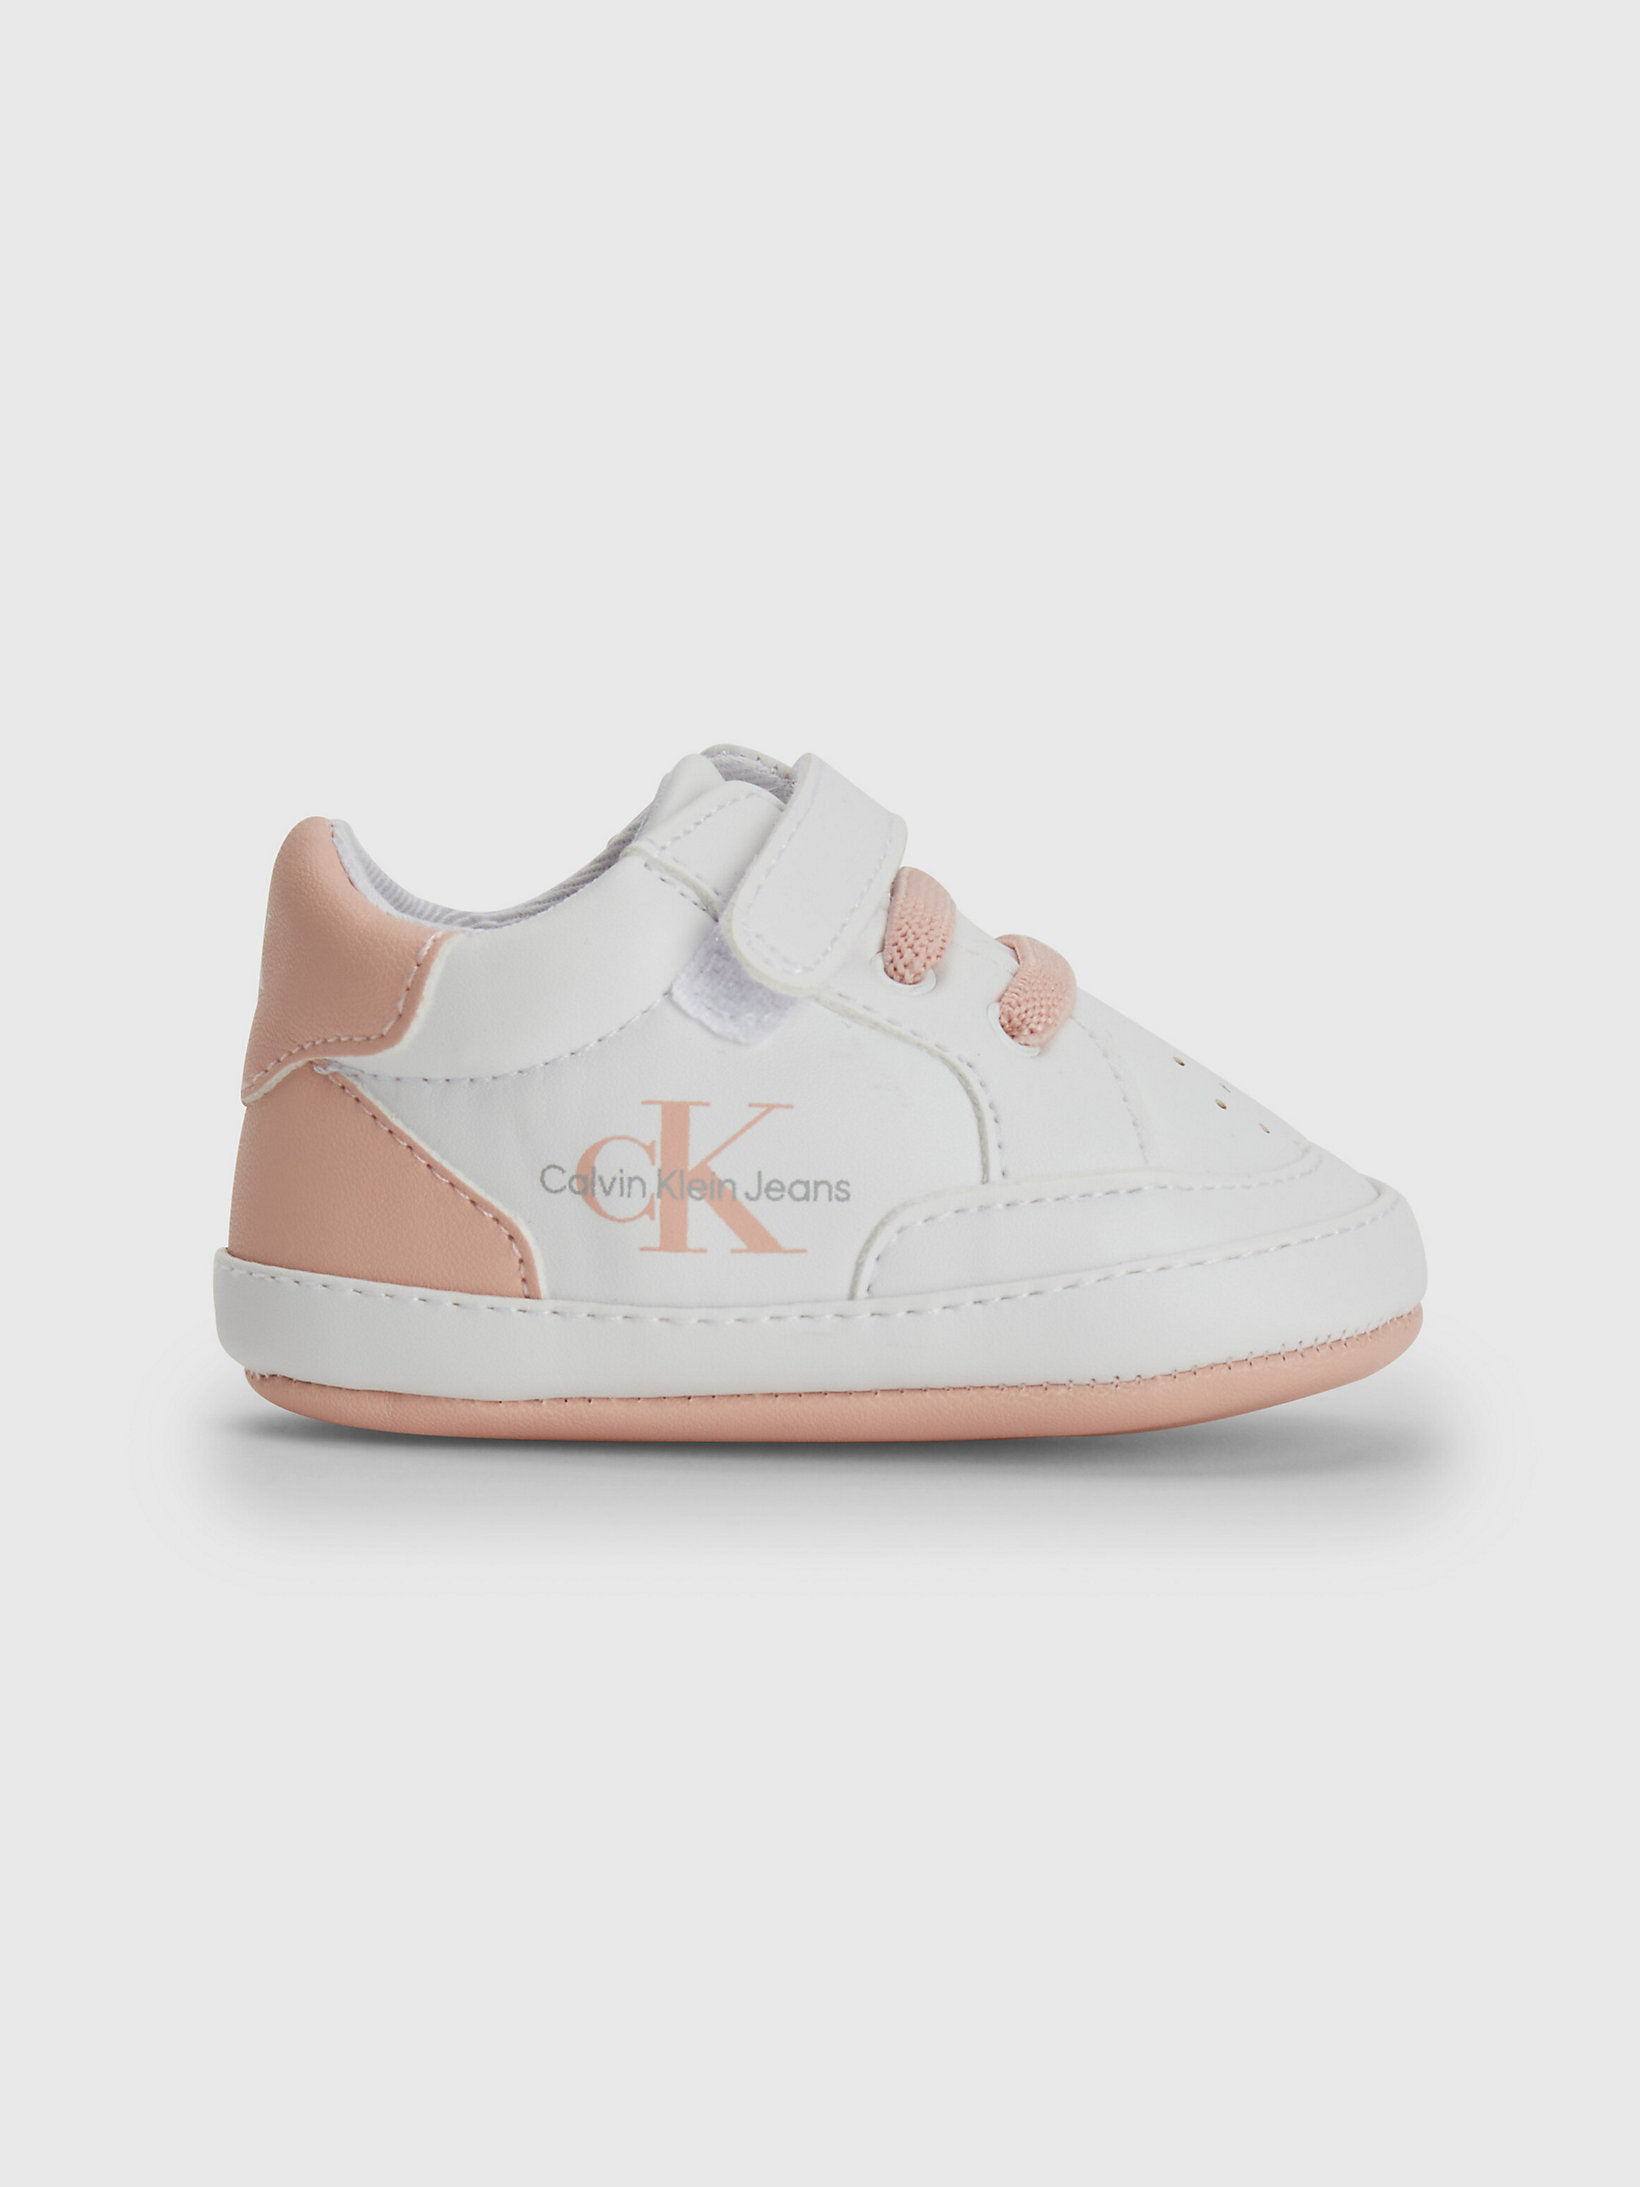 White/pink > Детские кроссовки из переработанных материалов > undefined girls - Calvin Klein